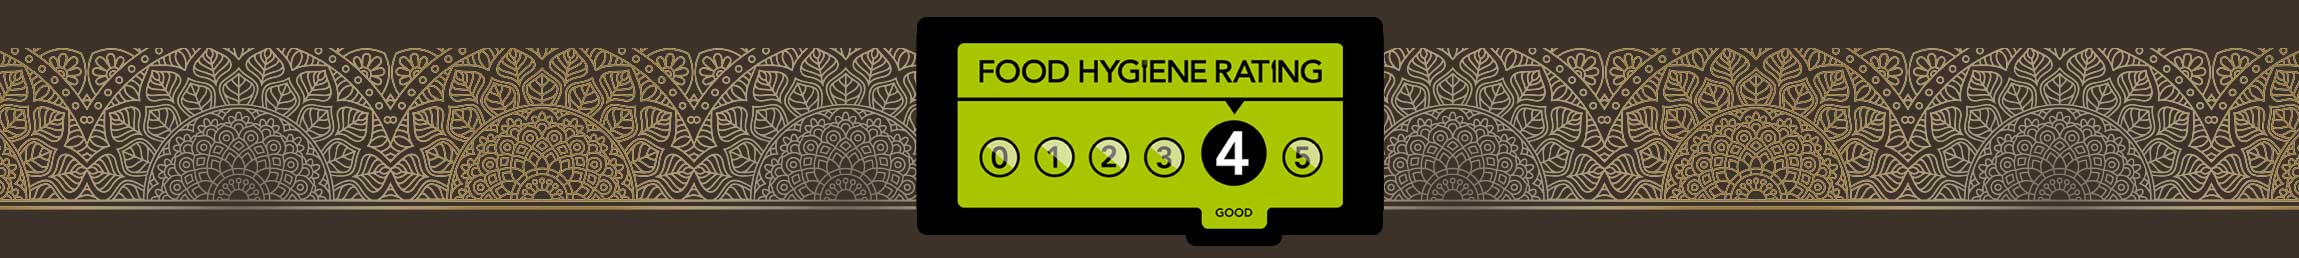 Odessa Tandoori E7 4 Star Food Hygiene Rating